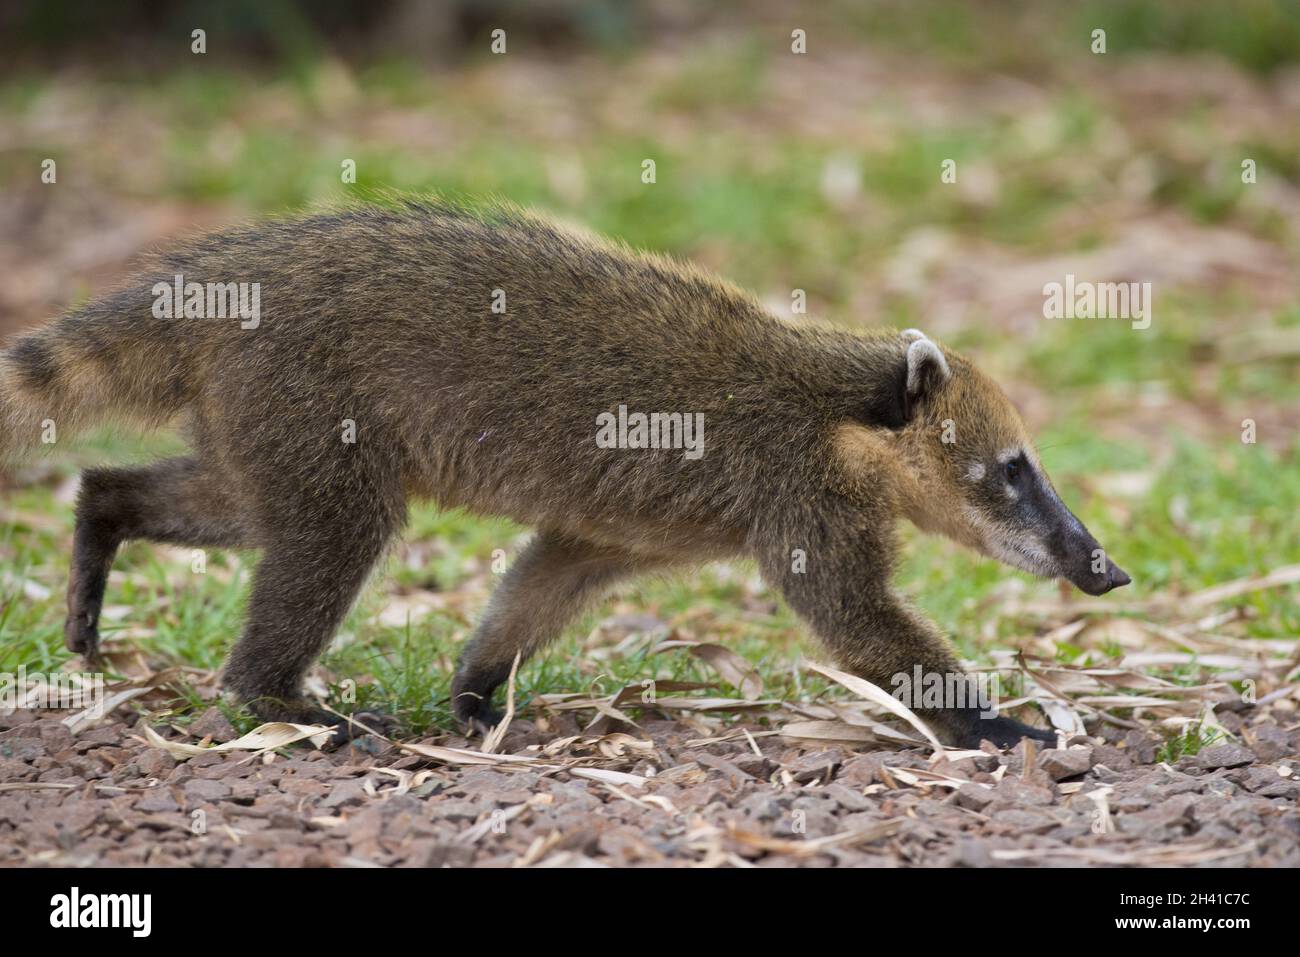 Coati walking on the Grass Stock Photo